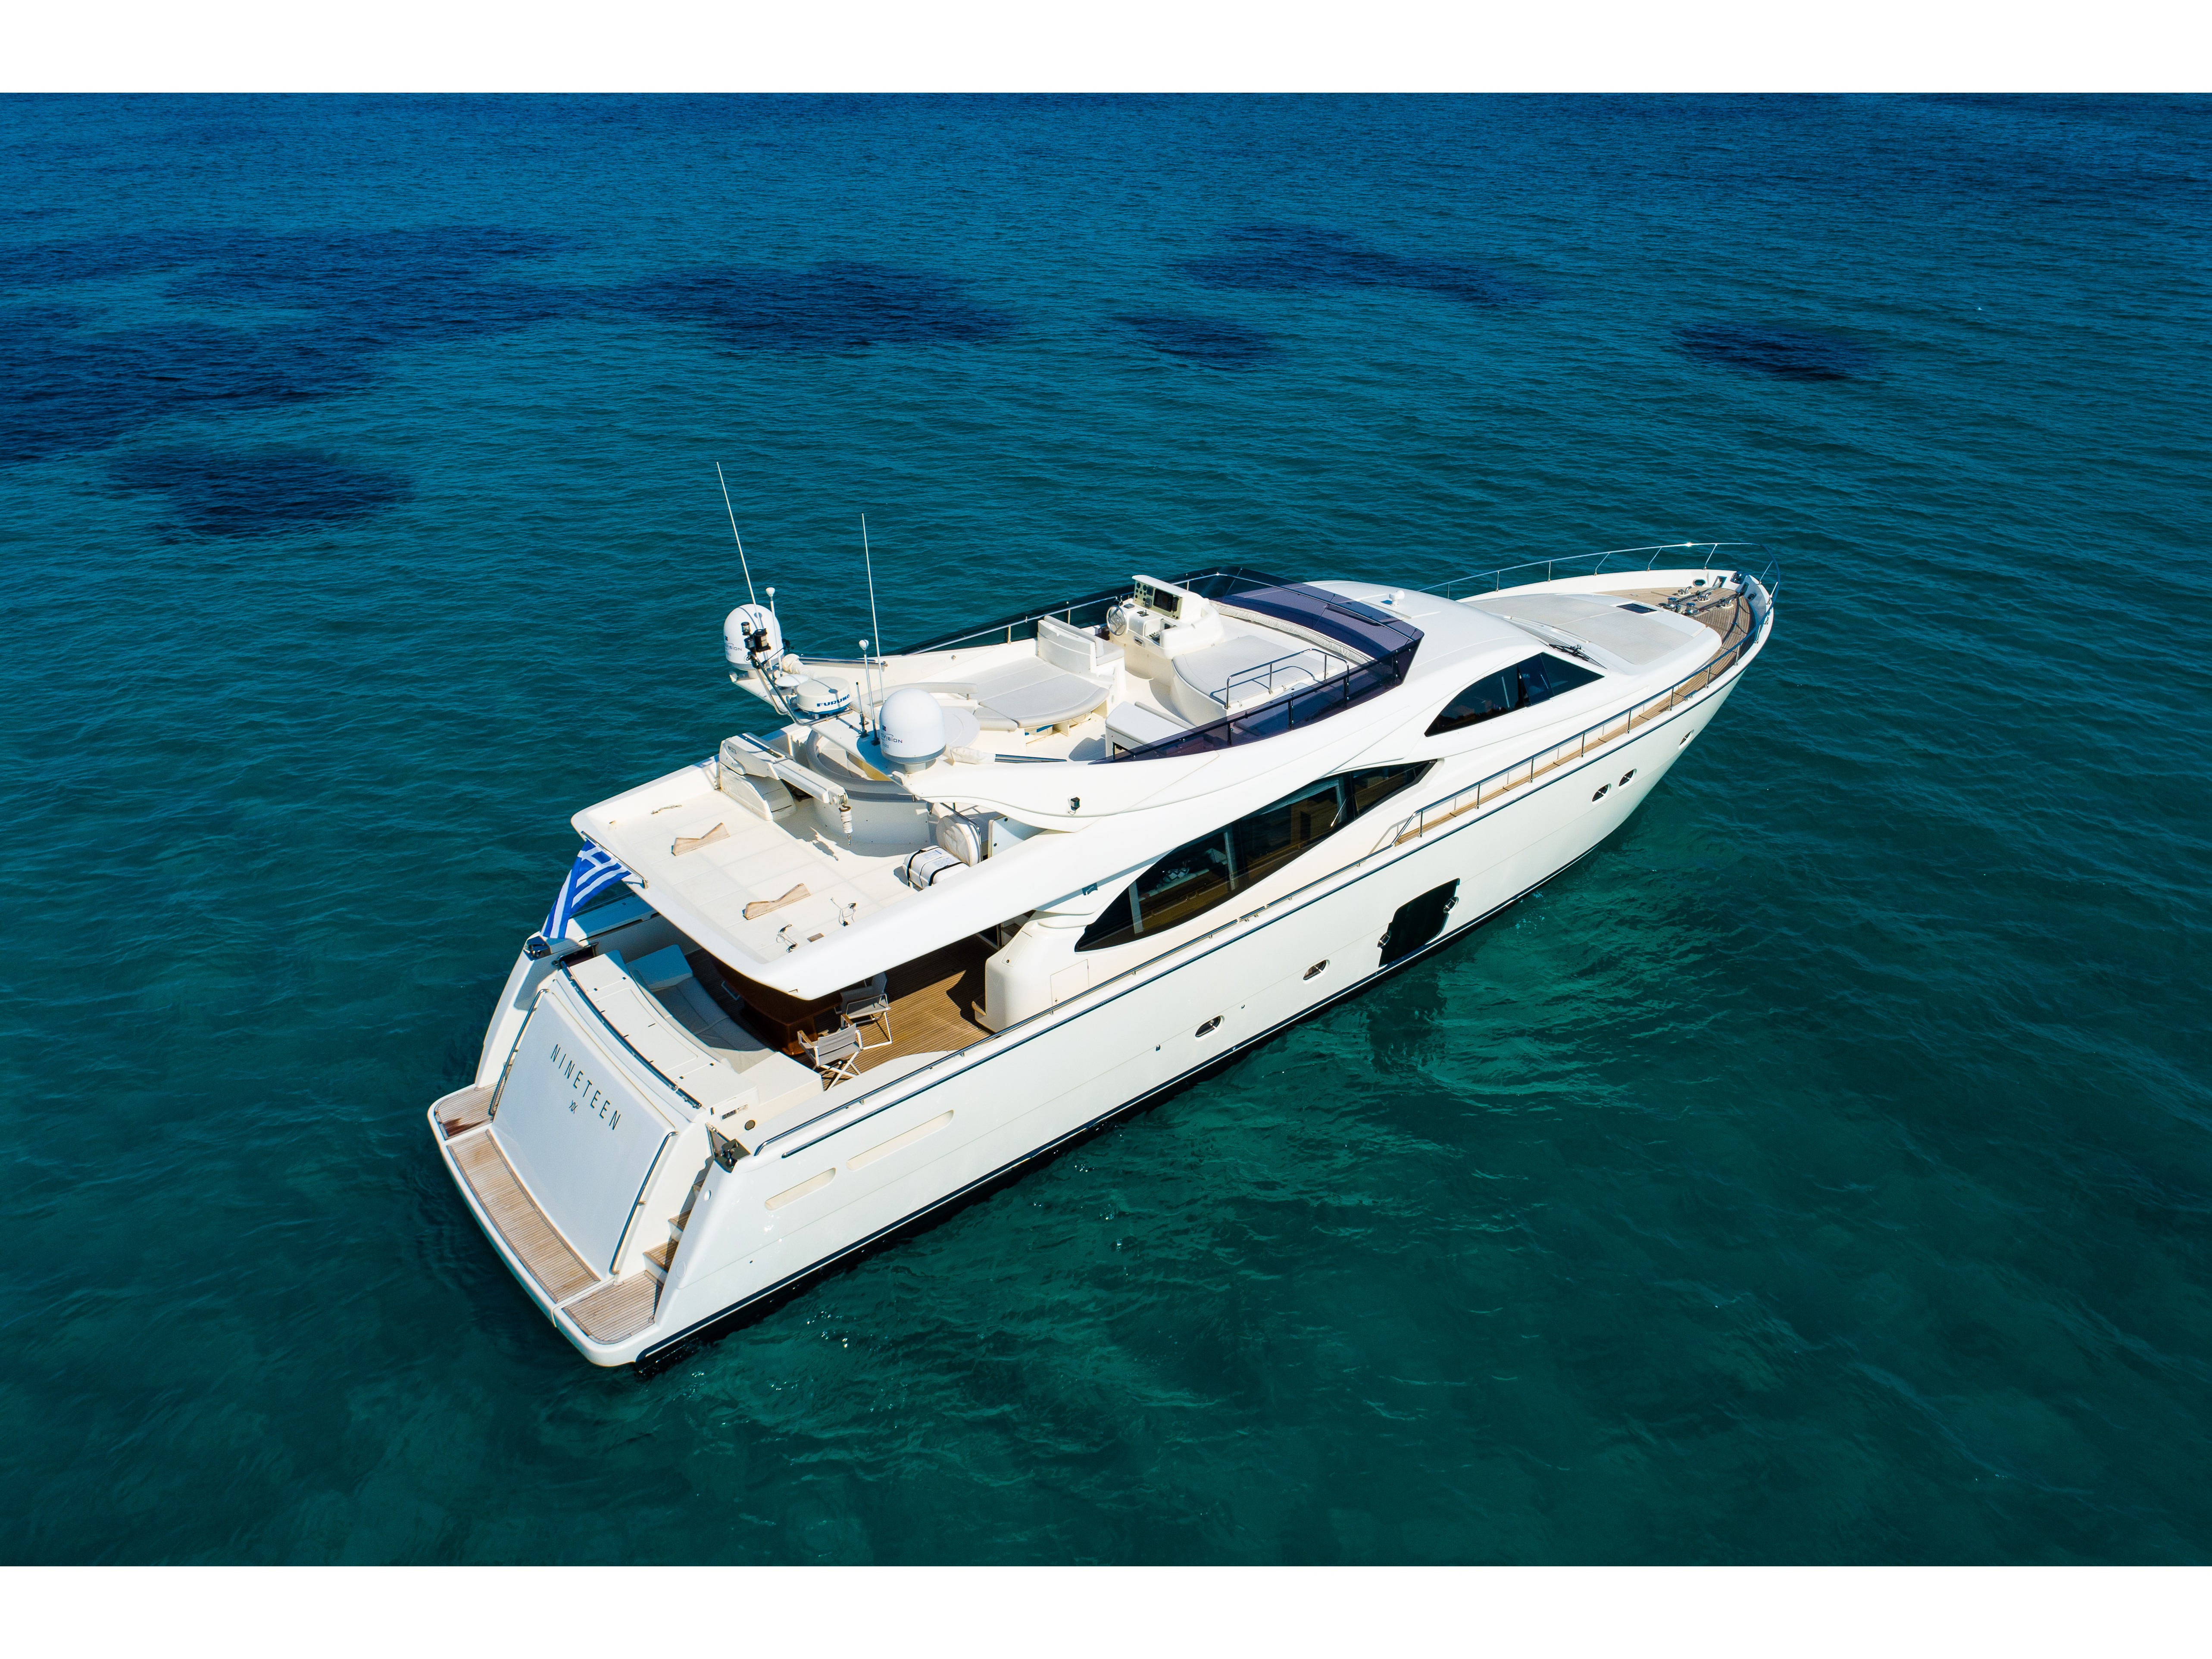 Ferretti 780 - Superyacht charter worldwide & Boat hire in Greece Athens and Saronic Gulf Athens Hellinikon Agios Kosmas Marina 1